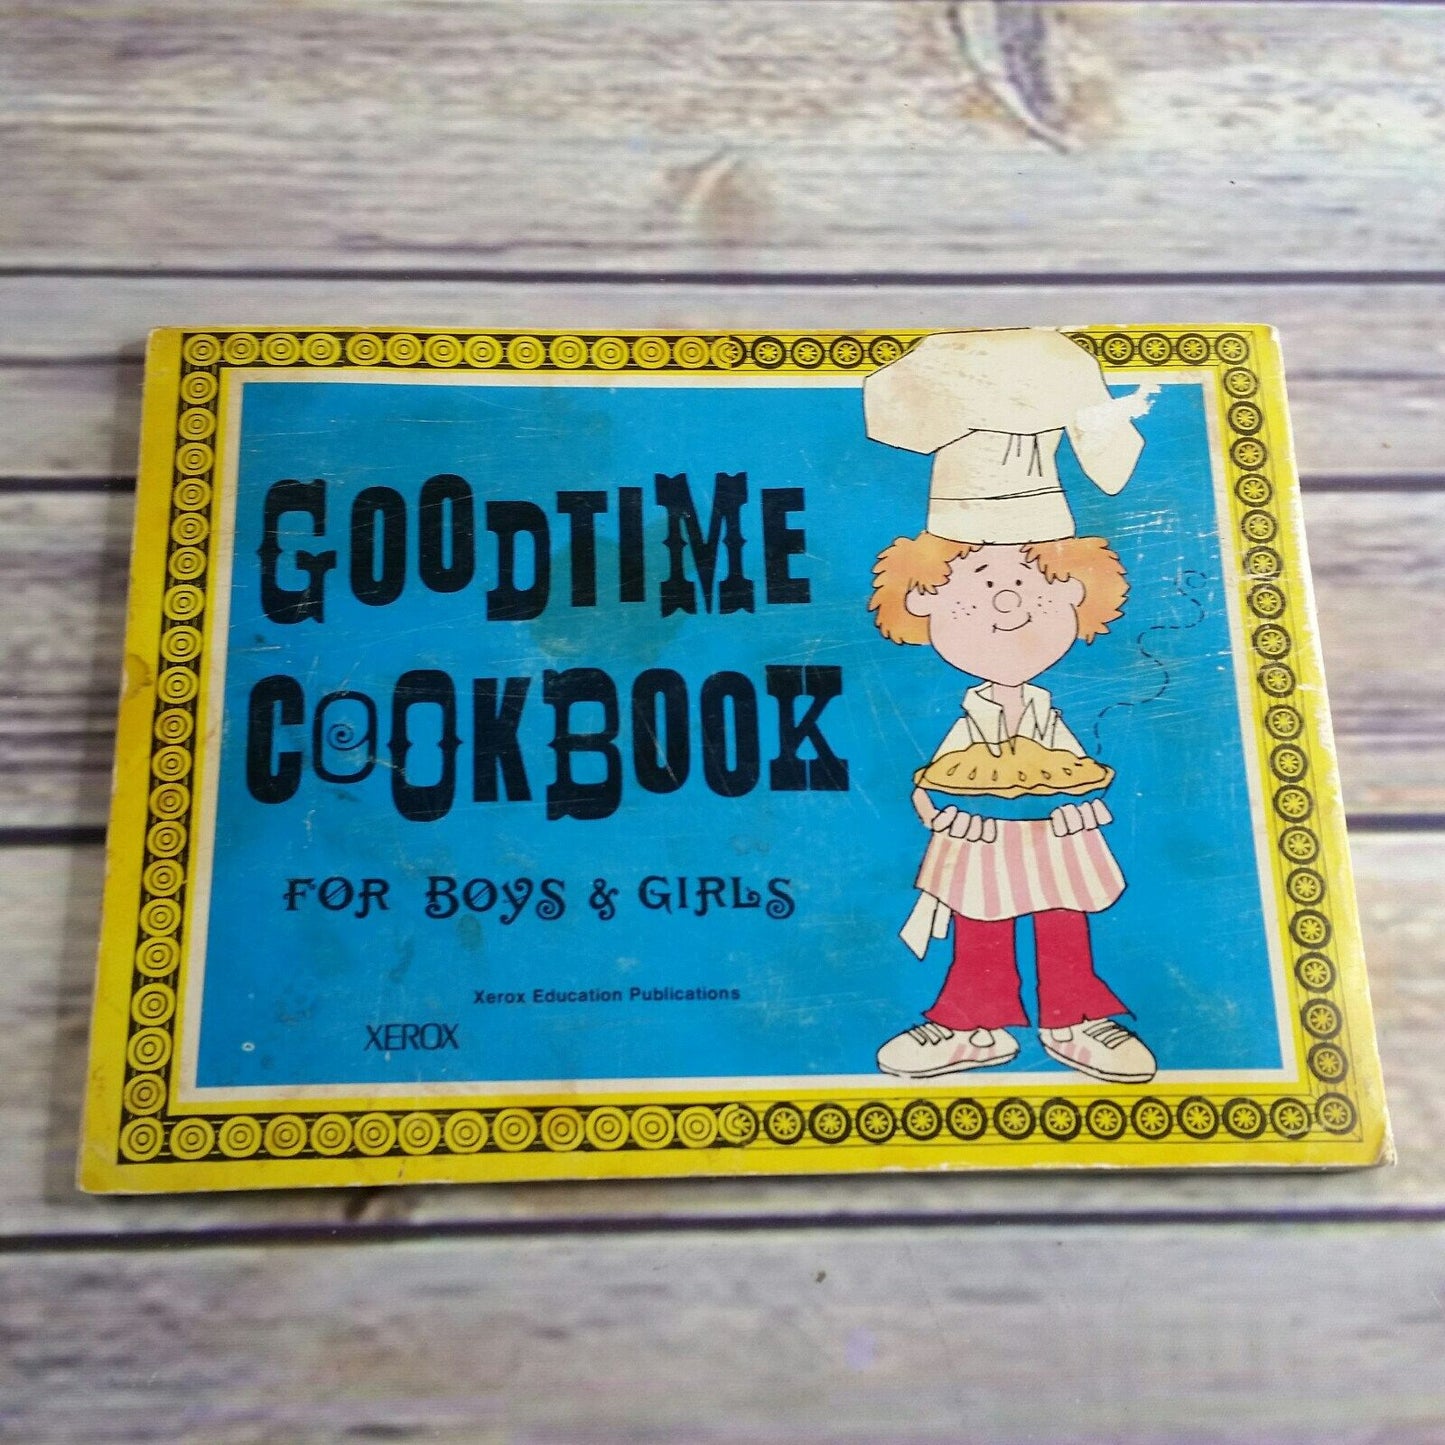 Vintage Kids Cookbook Goodtime Cookbook Paperback Childrens Cook Book John Mongillo 1973 Xerox